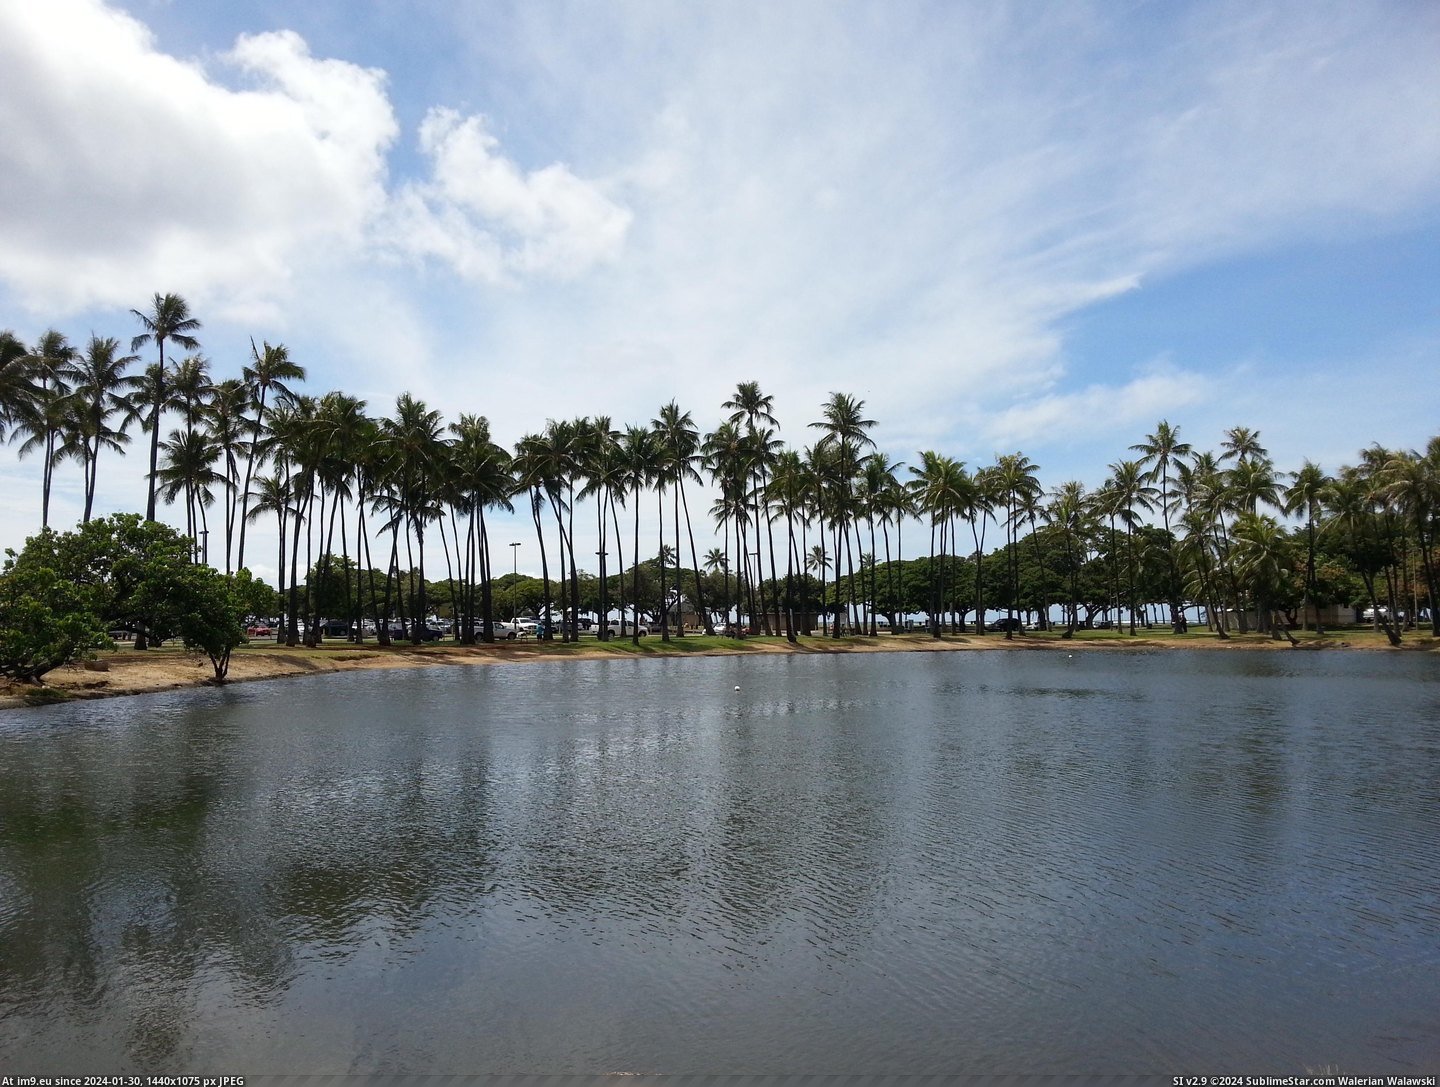  #Image  20131002_115937 Pic. (Image of album Hawaii))